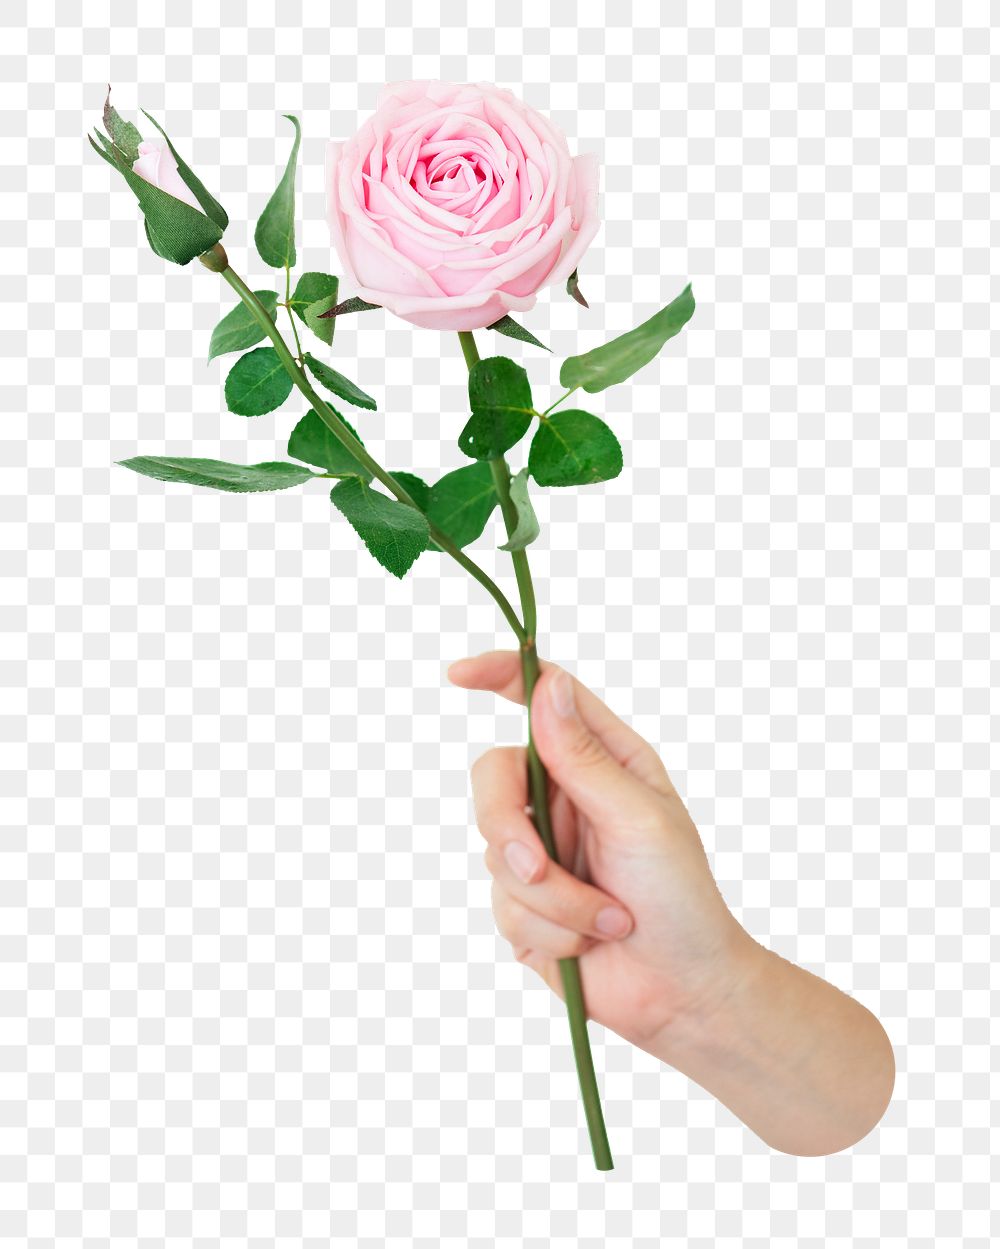 Hand holding rose png, transparent background